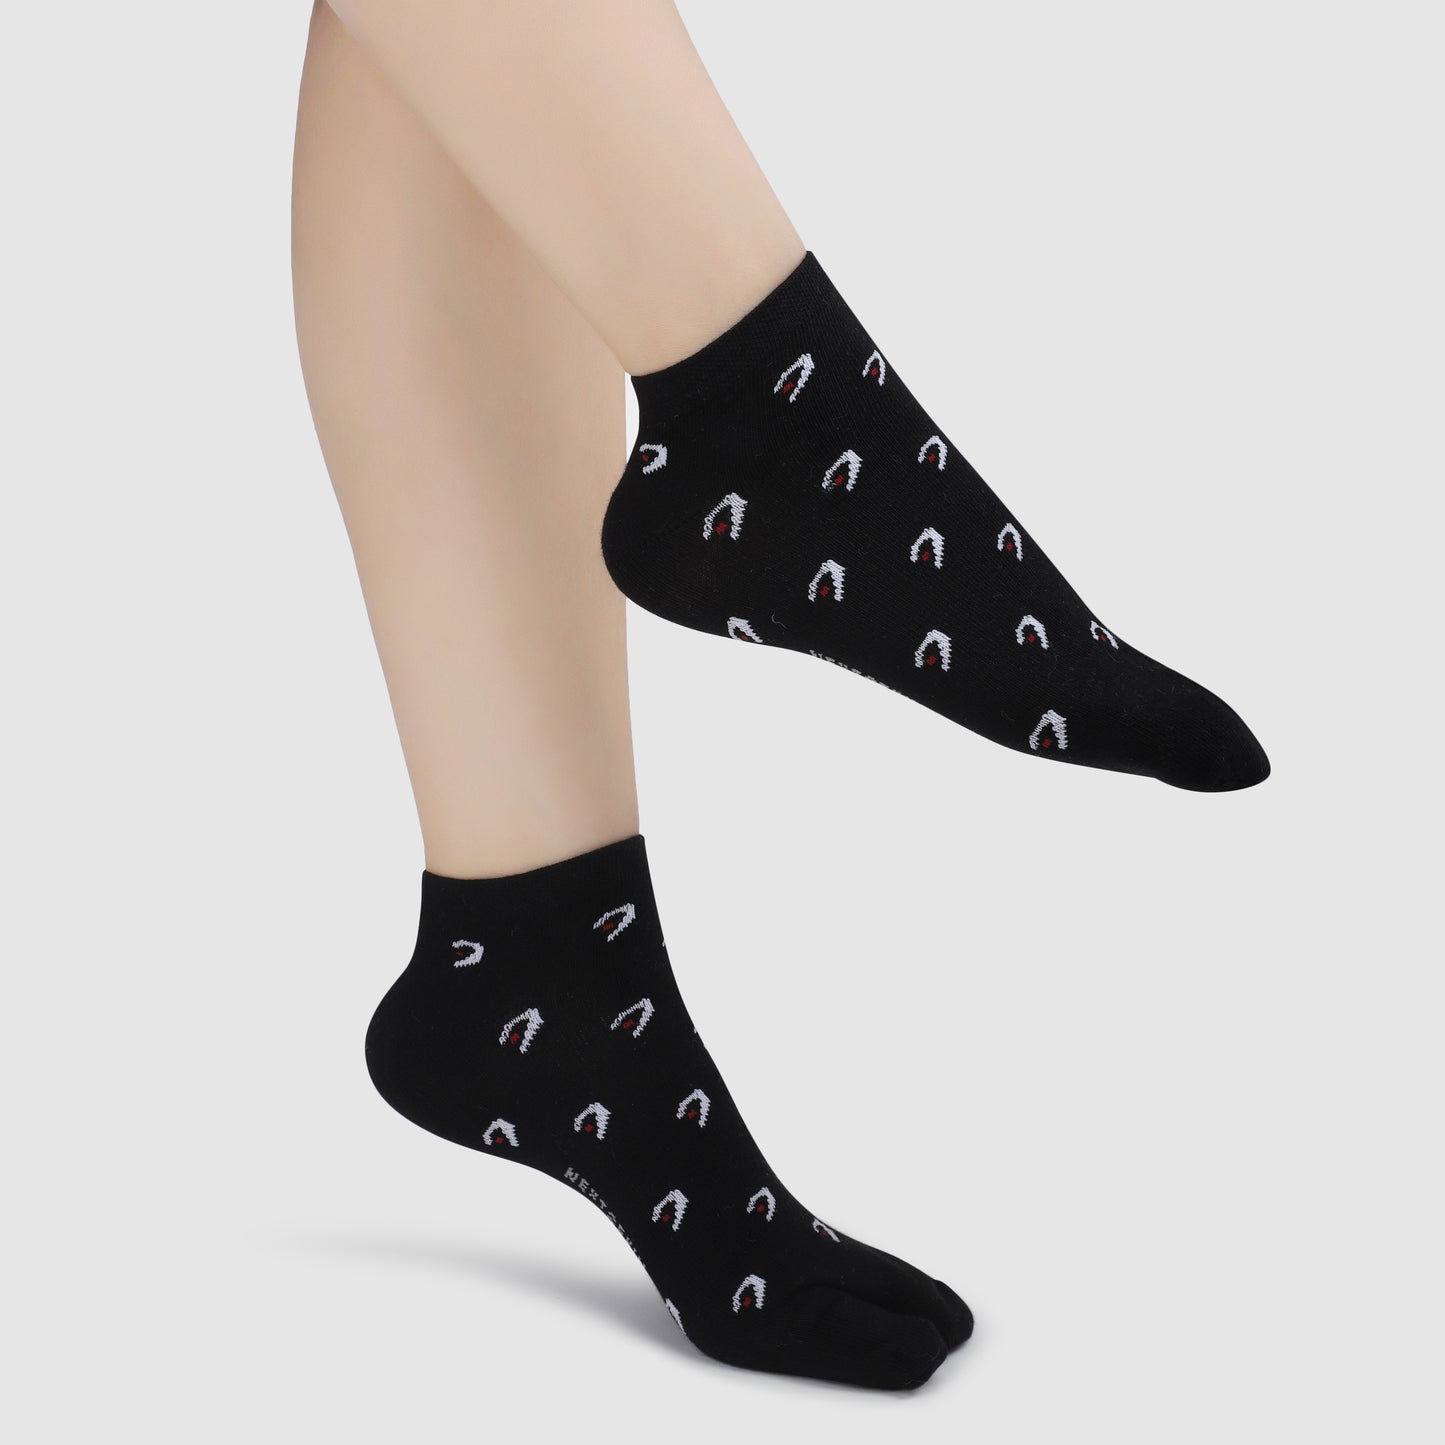 Comet Attack Ankle Thumb Socks-Black